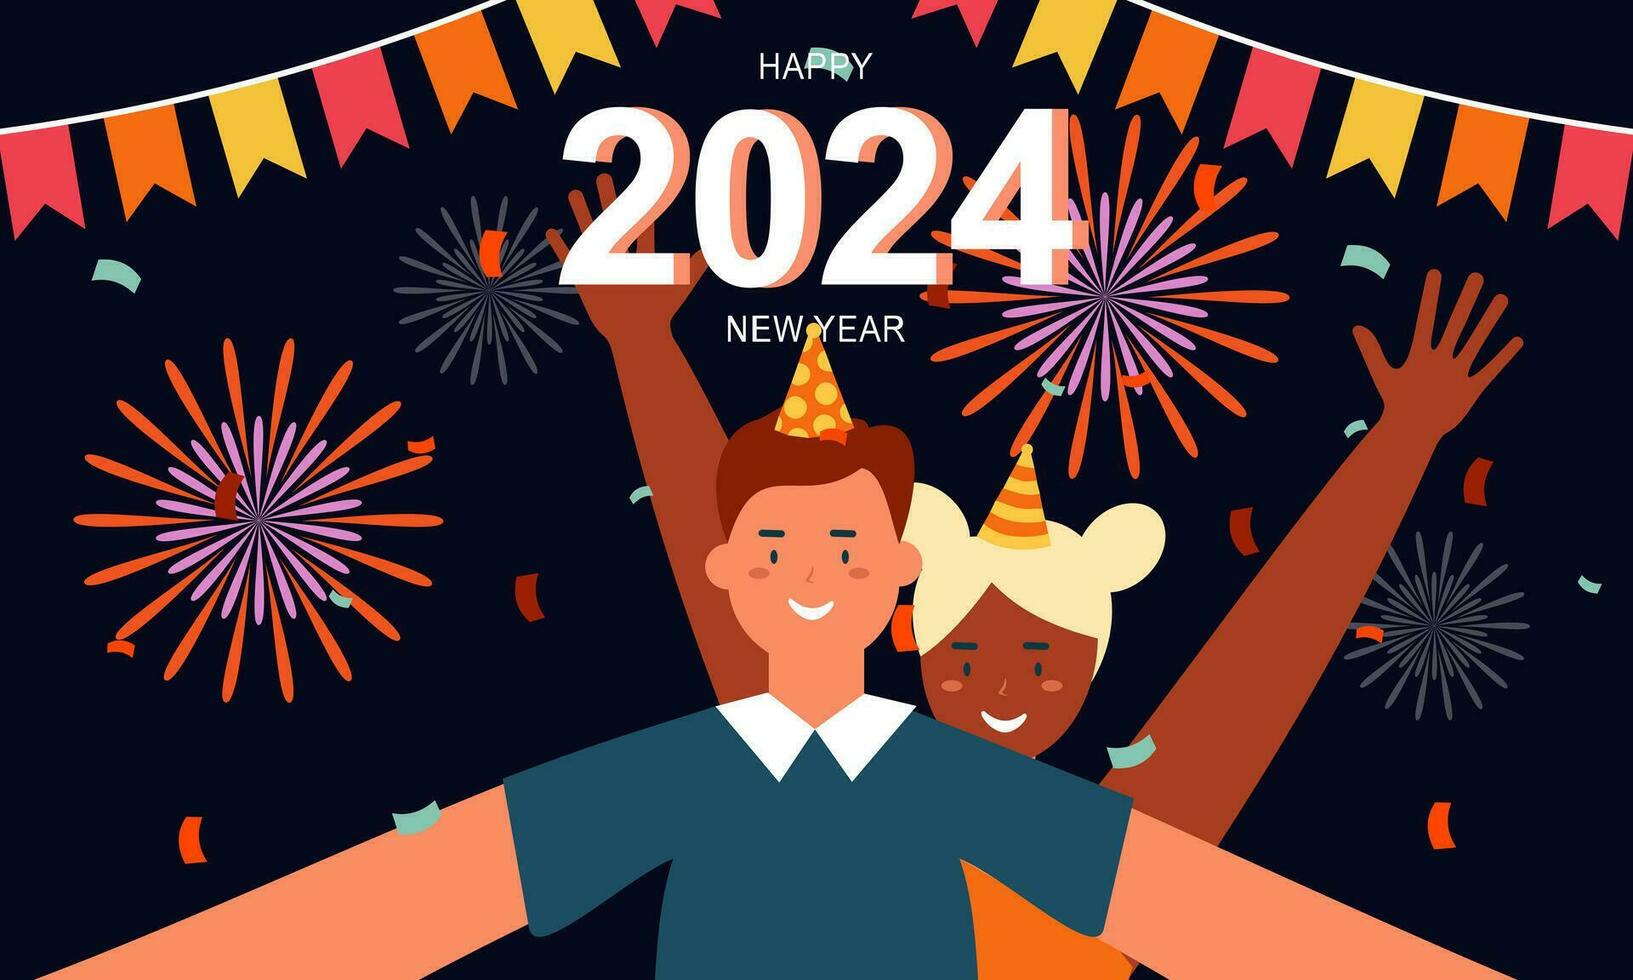 Happy new year 2024 celebration illustration vector